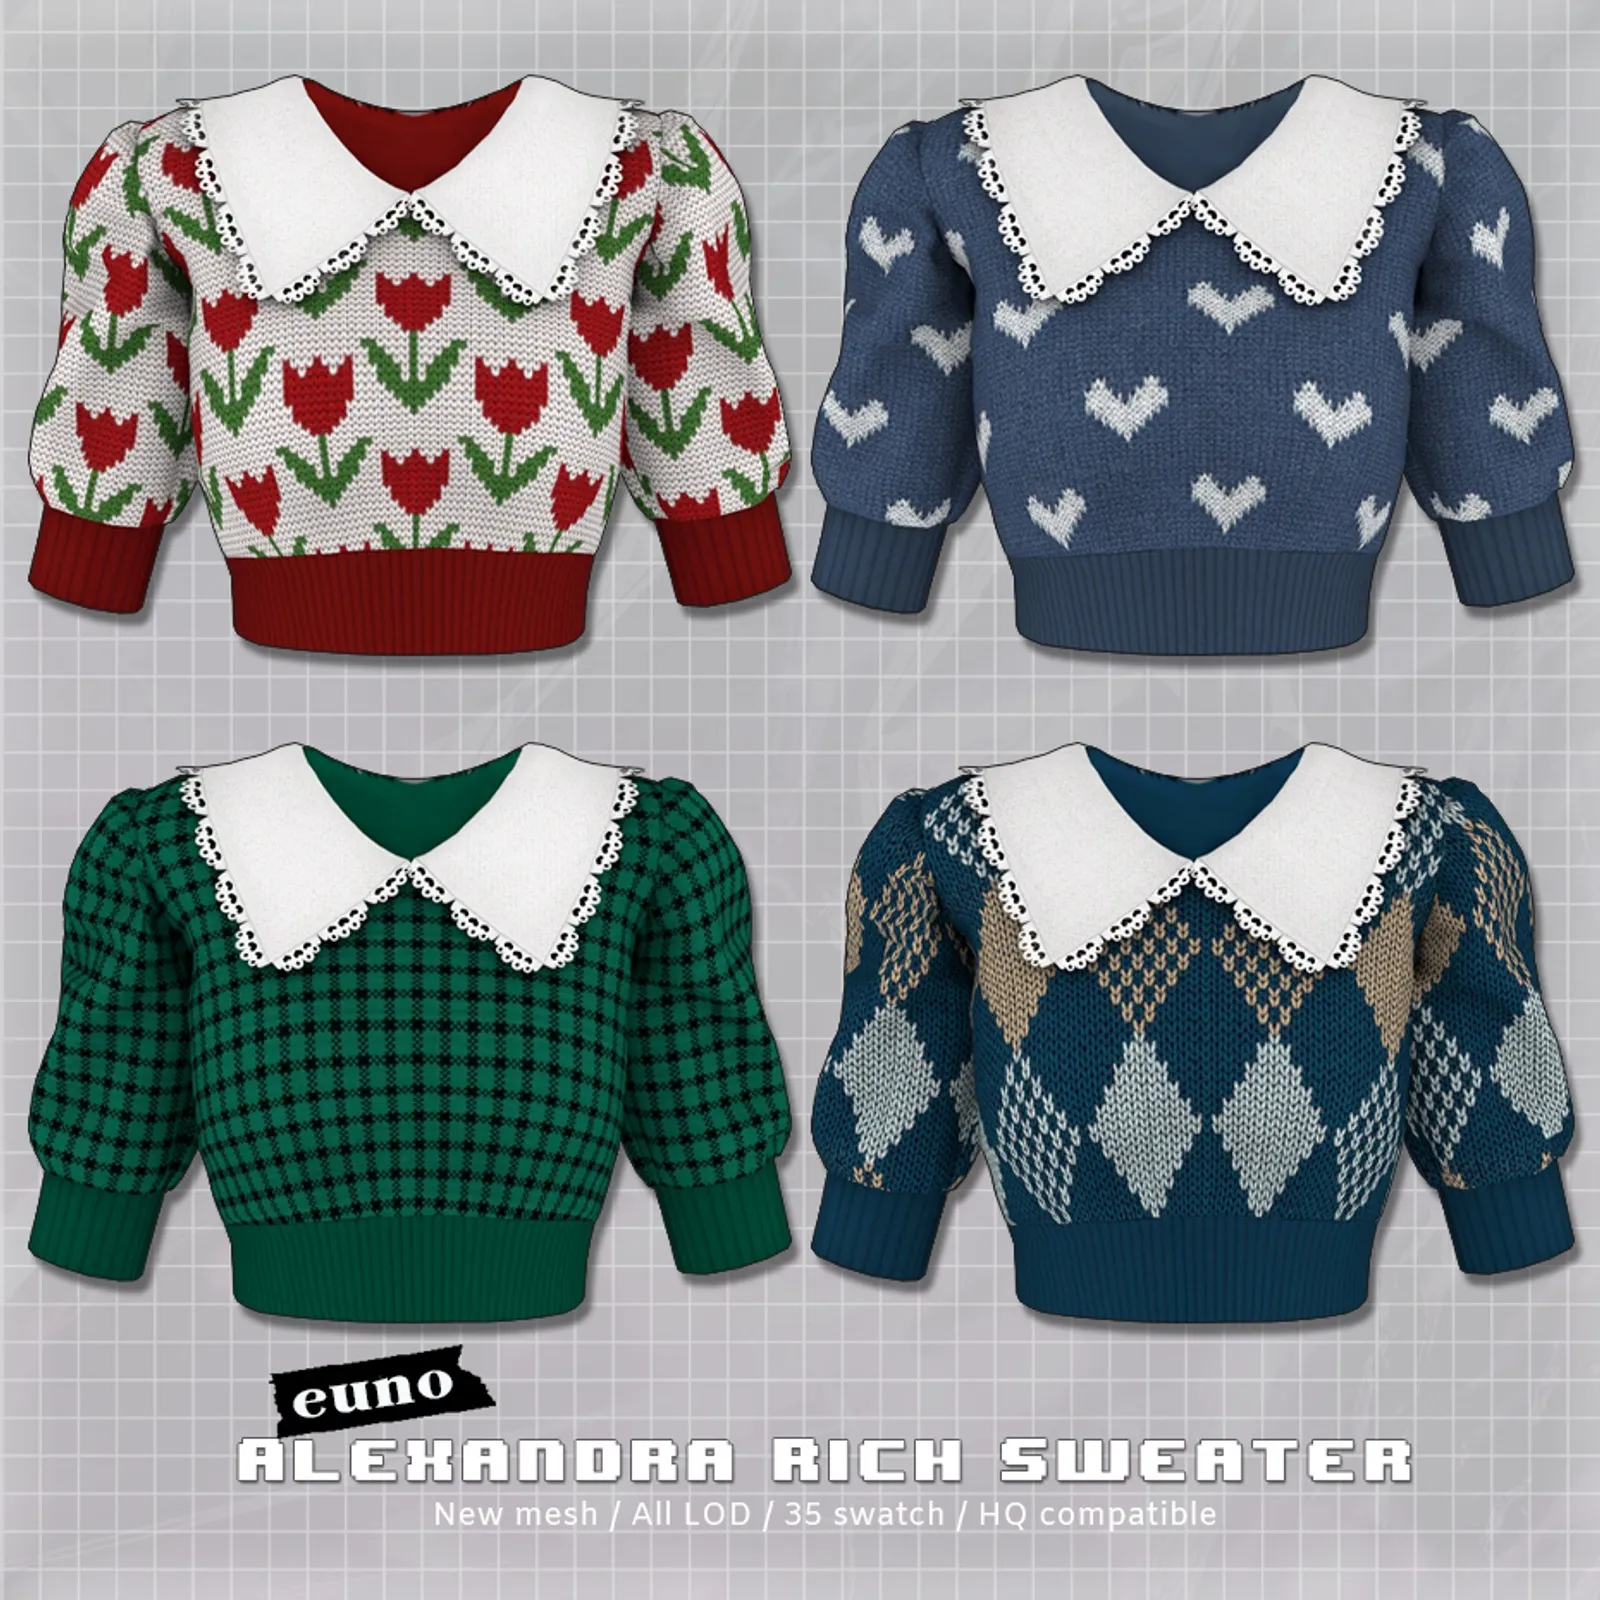 Alexandra Rich Sweater